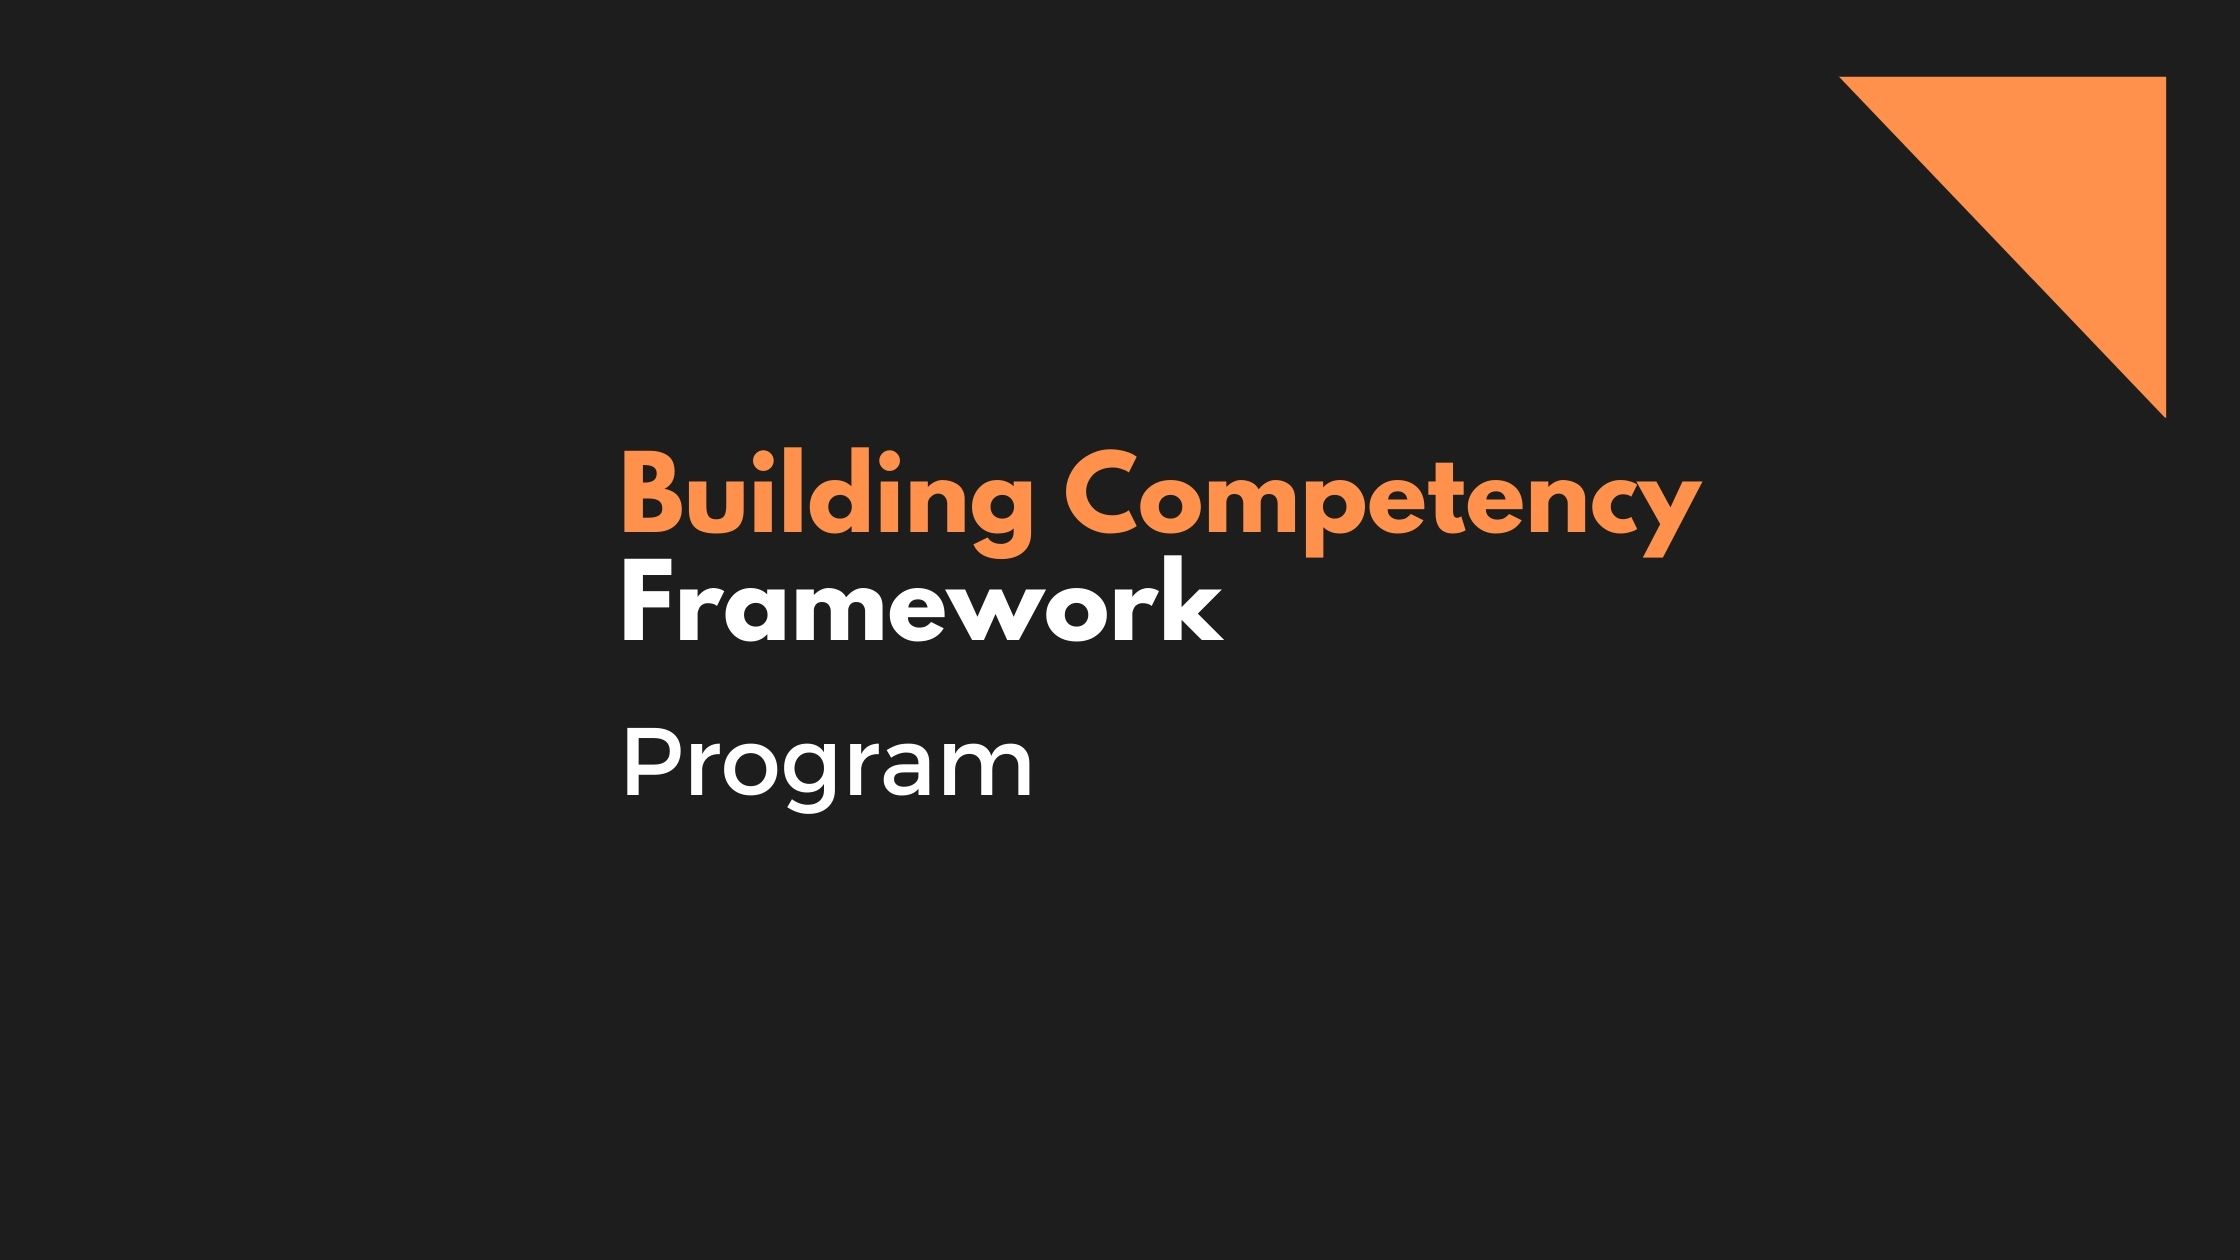 Building Competency Framework